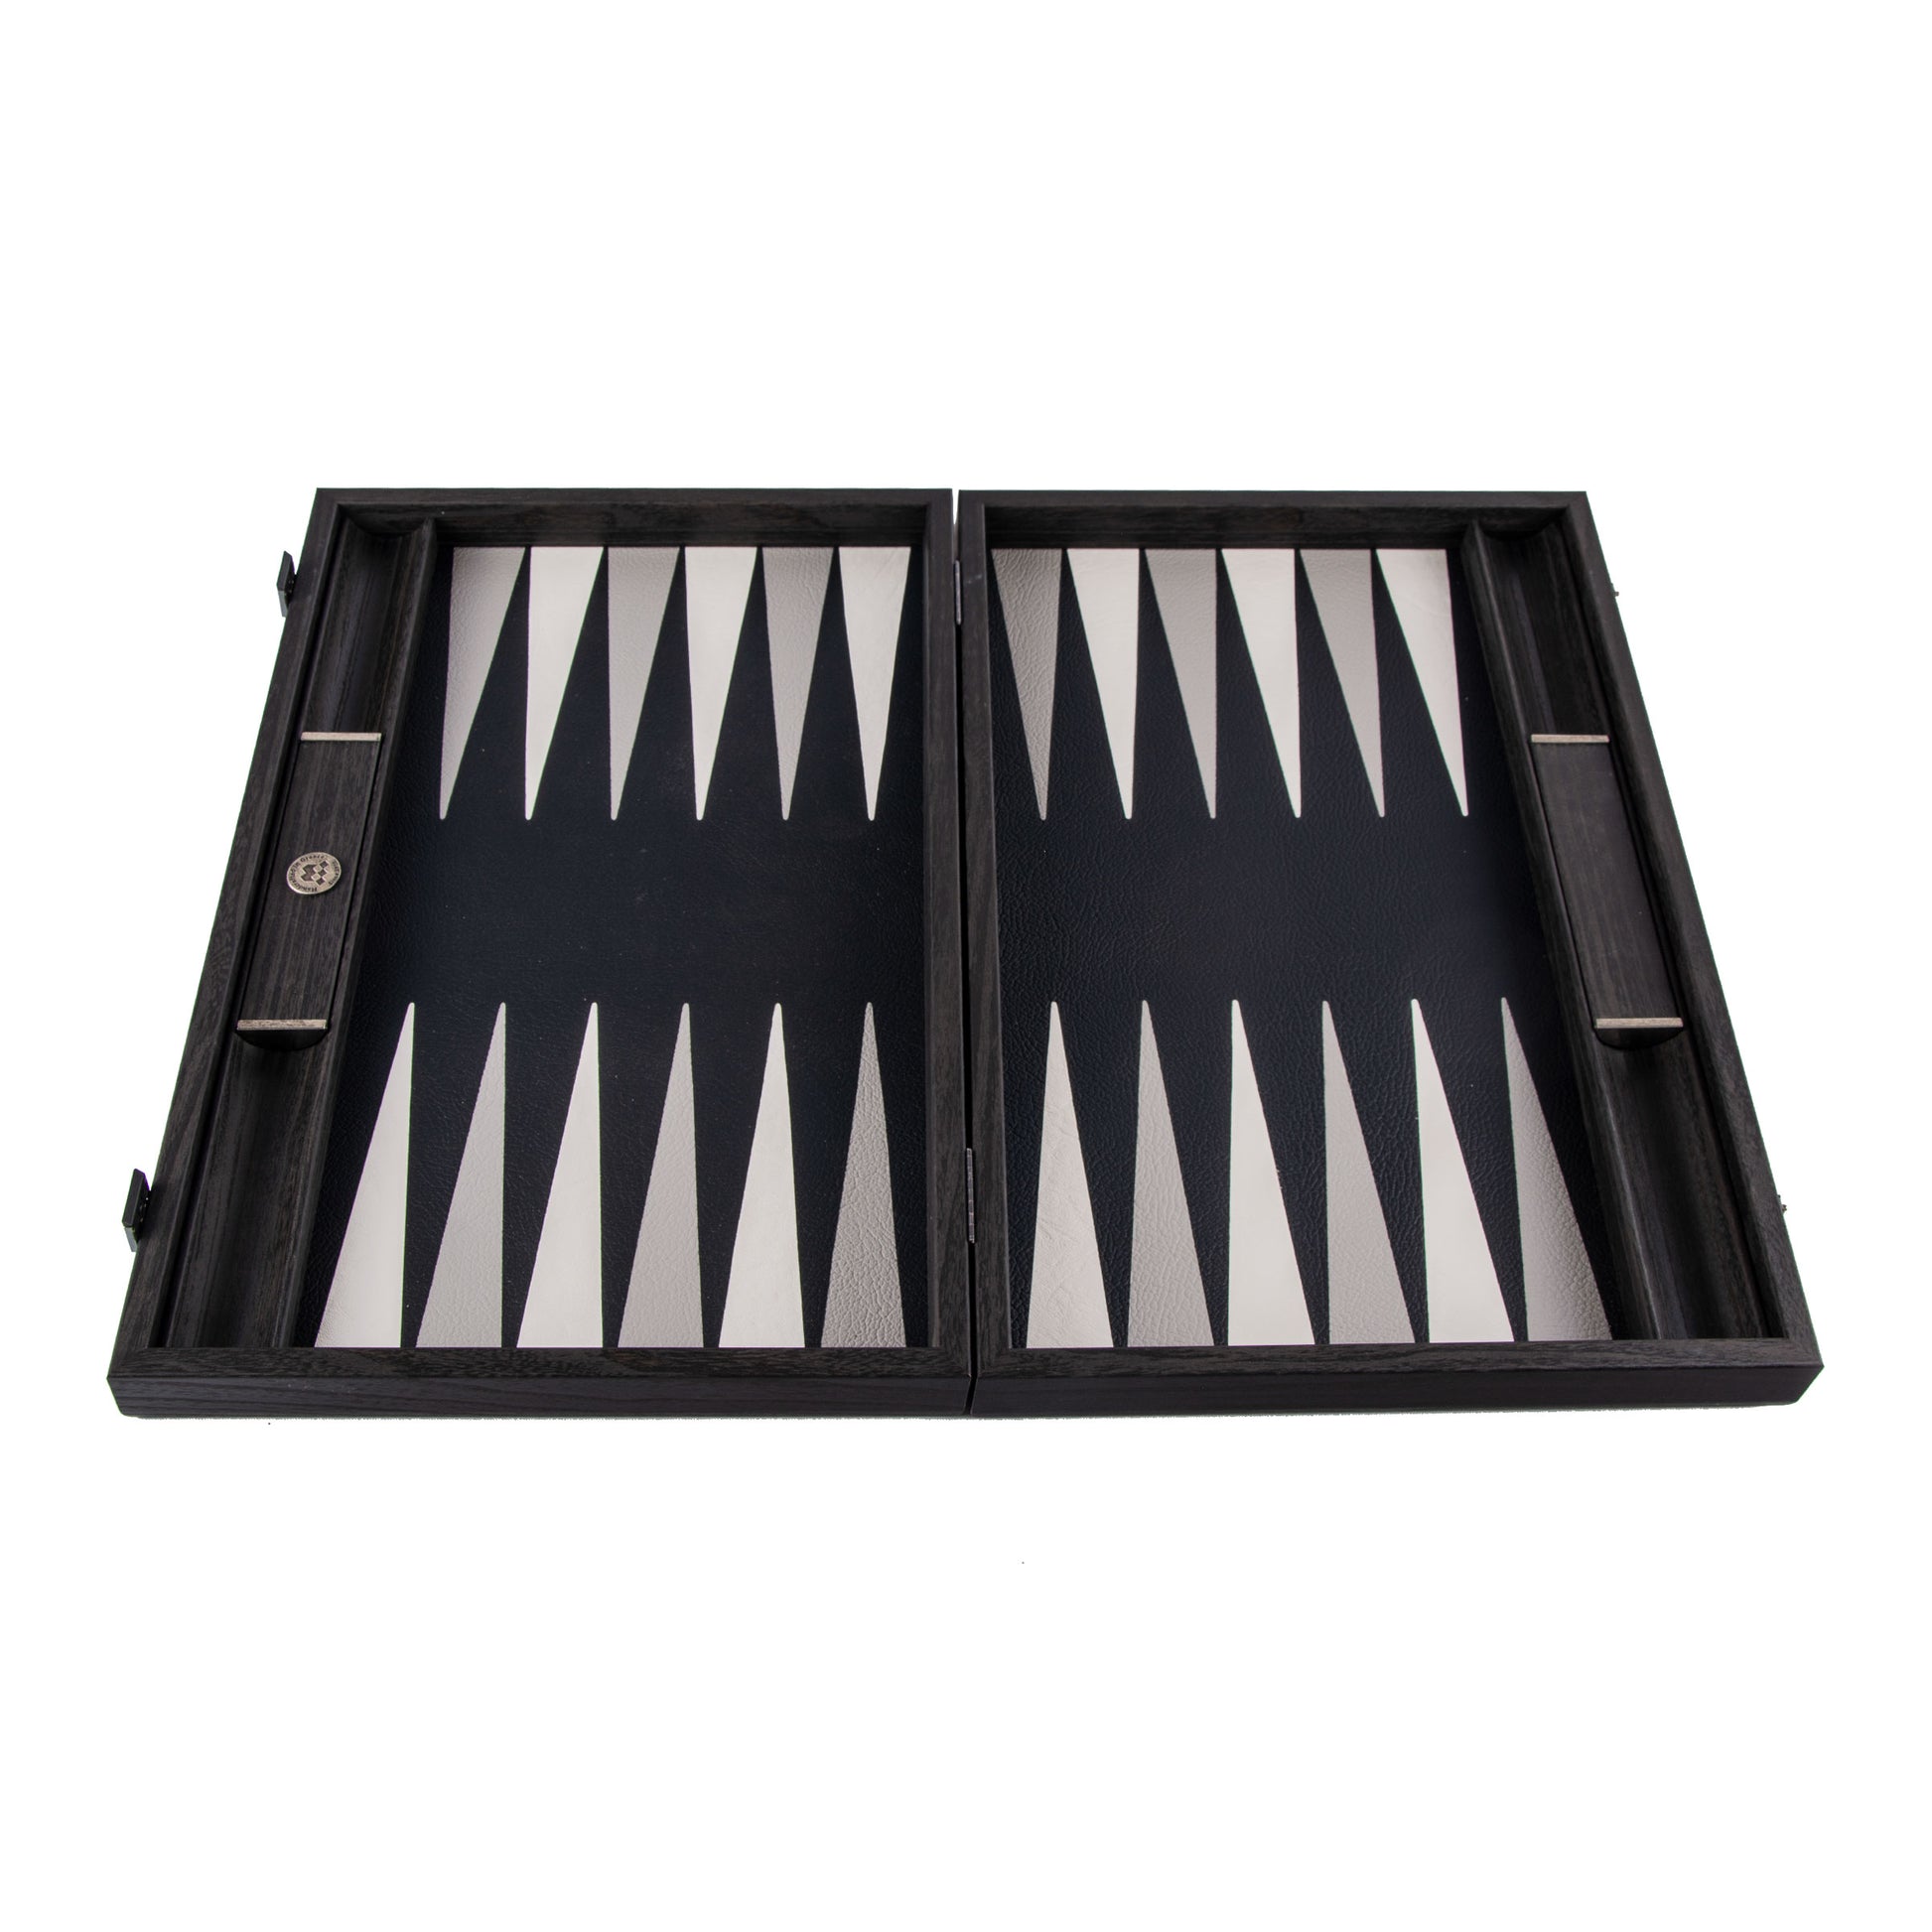 Premium Leatherette Classic Black Backgammon Set - Premium Backgammon from MANOPOULOS Chess & Backgammon - Just €215! Shop now at MANOPOULOS Chess & Backgammon